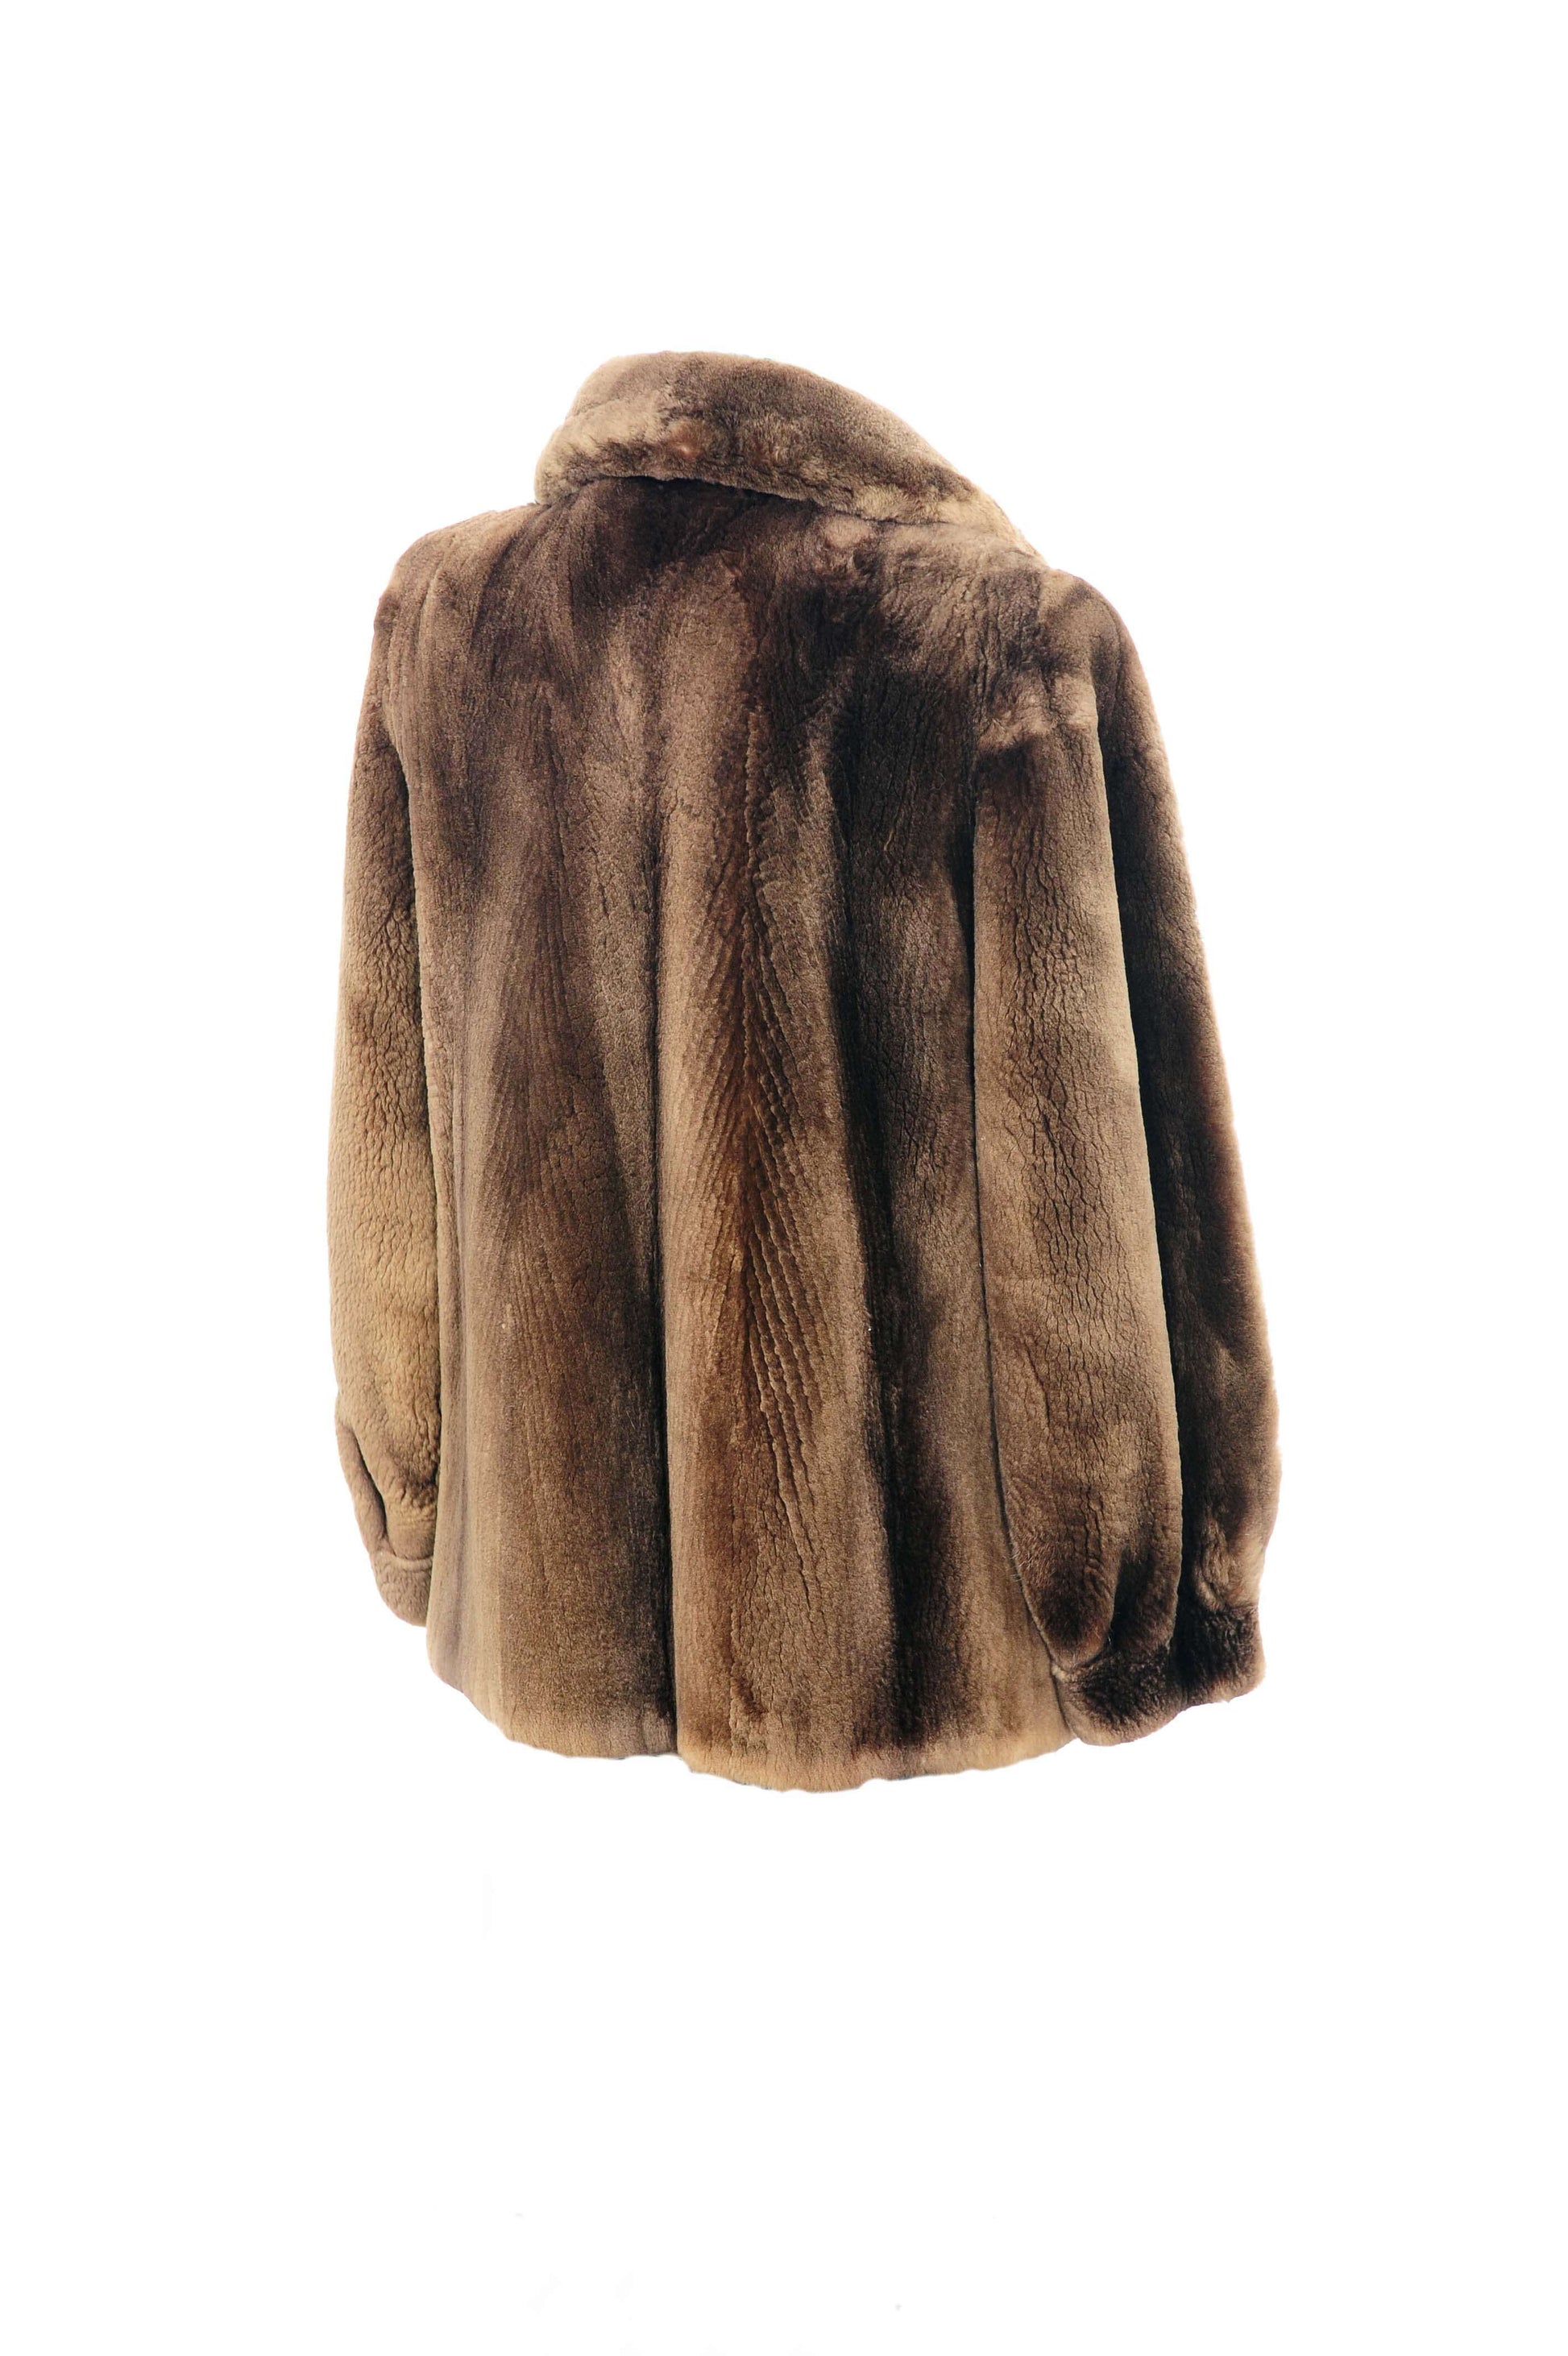 Pre-Owned Sheared Beaver Jacket Starlight Furs 